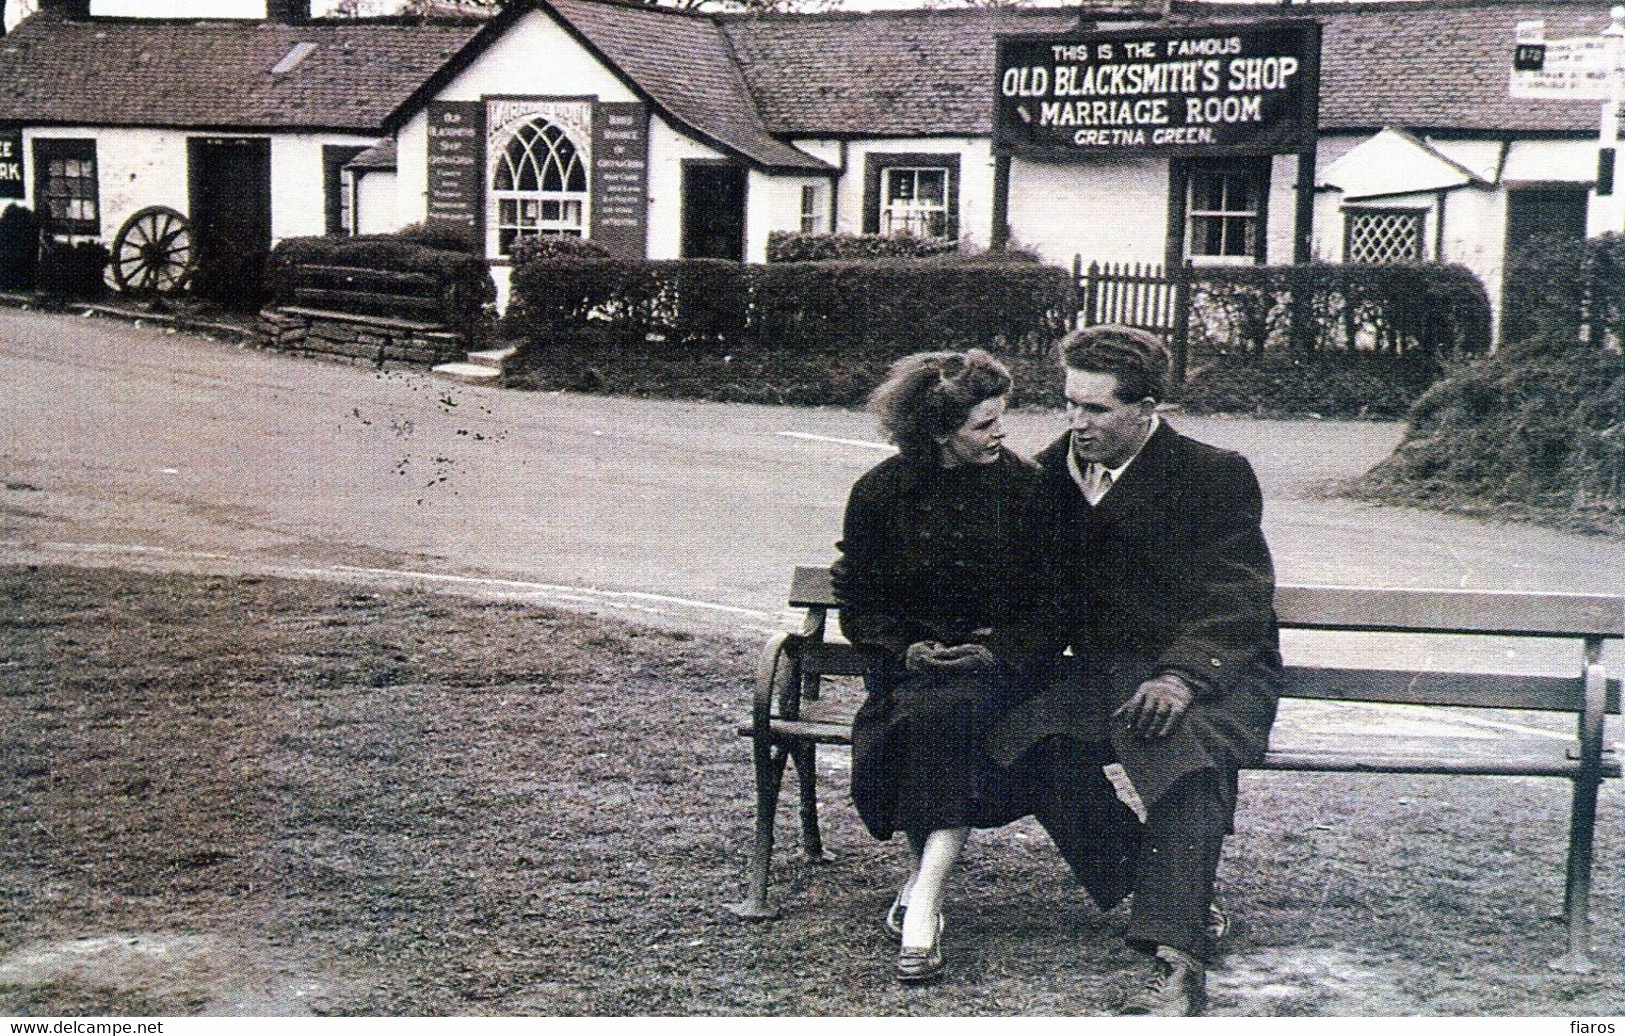 "Gretna Green, April 1956" Old Blacksmith's Shop, Scotland, Marriage, Young Couple [CPM Nostalgia Postcard Reproduction] - Noces